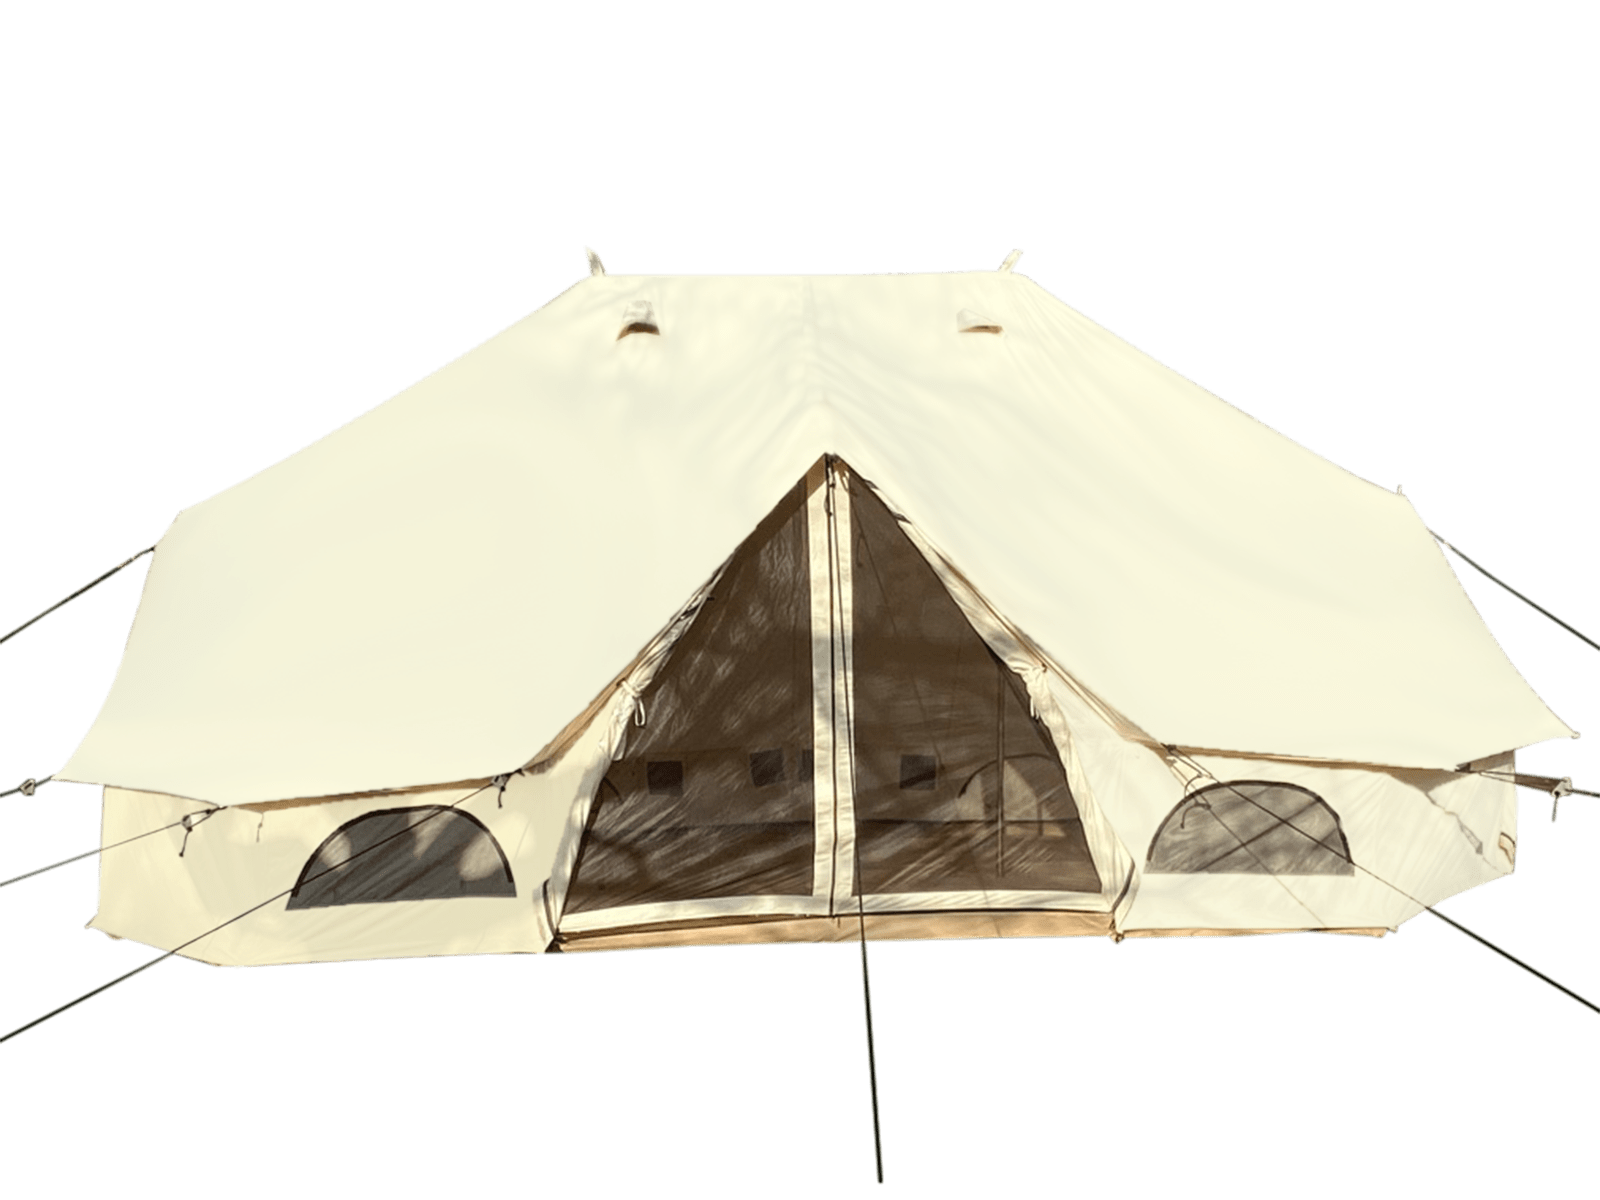 Skandika Tipii 10 Personen Camping Zelt 3 m Stehhöhe Glamping beige Neu